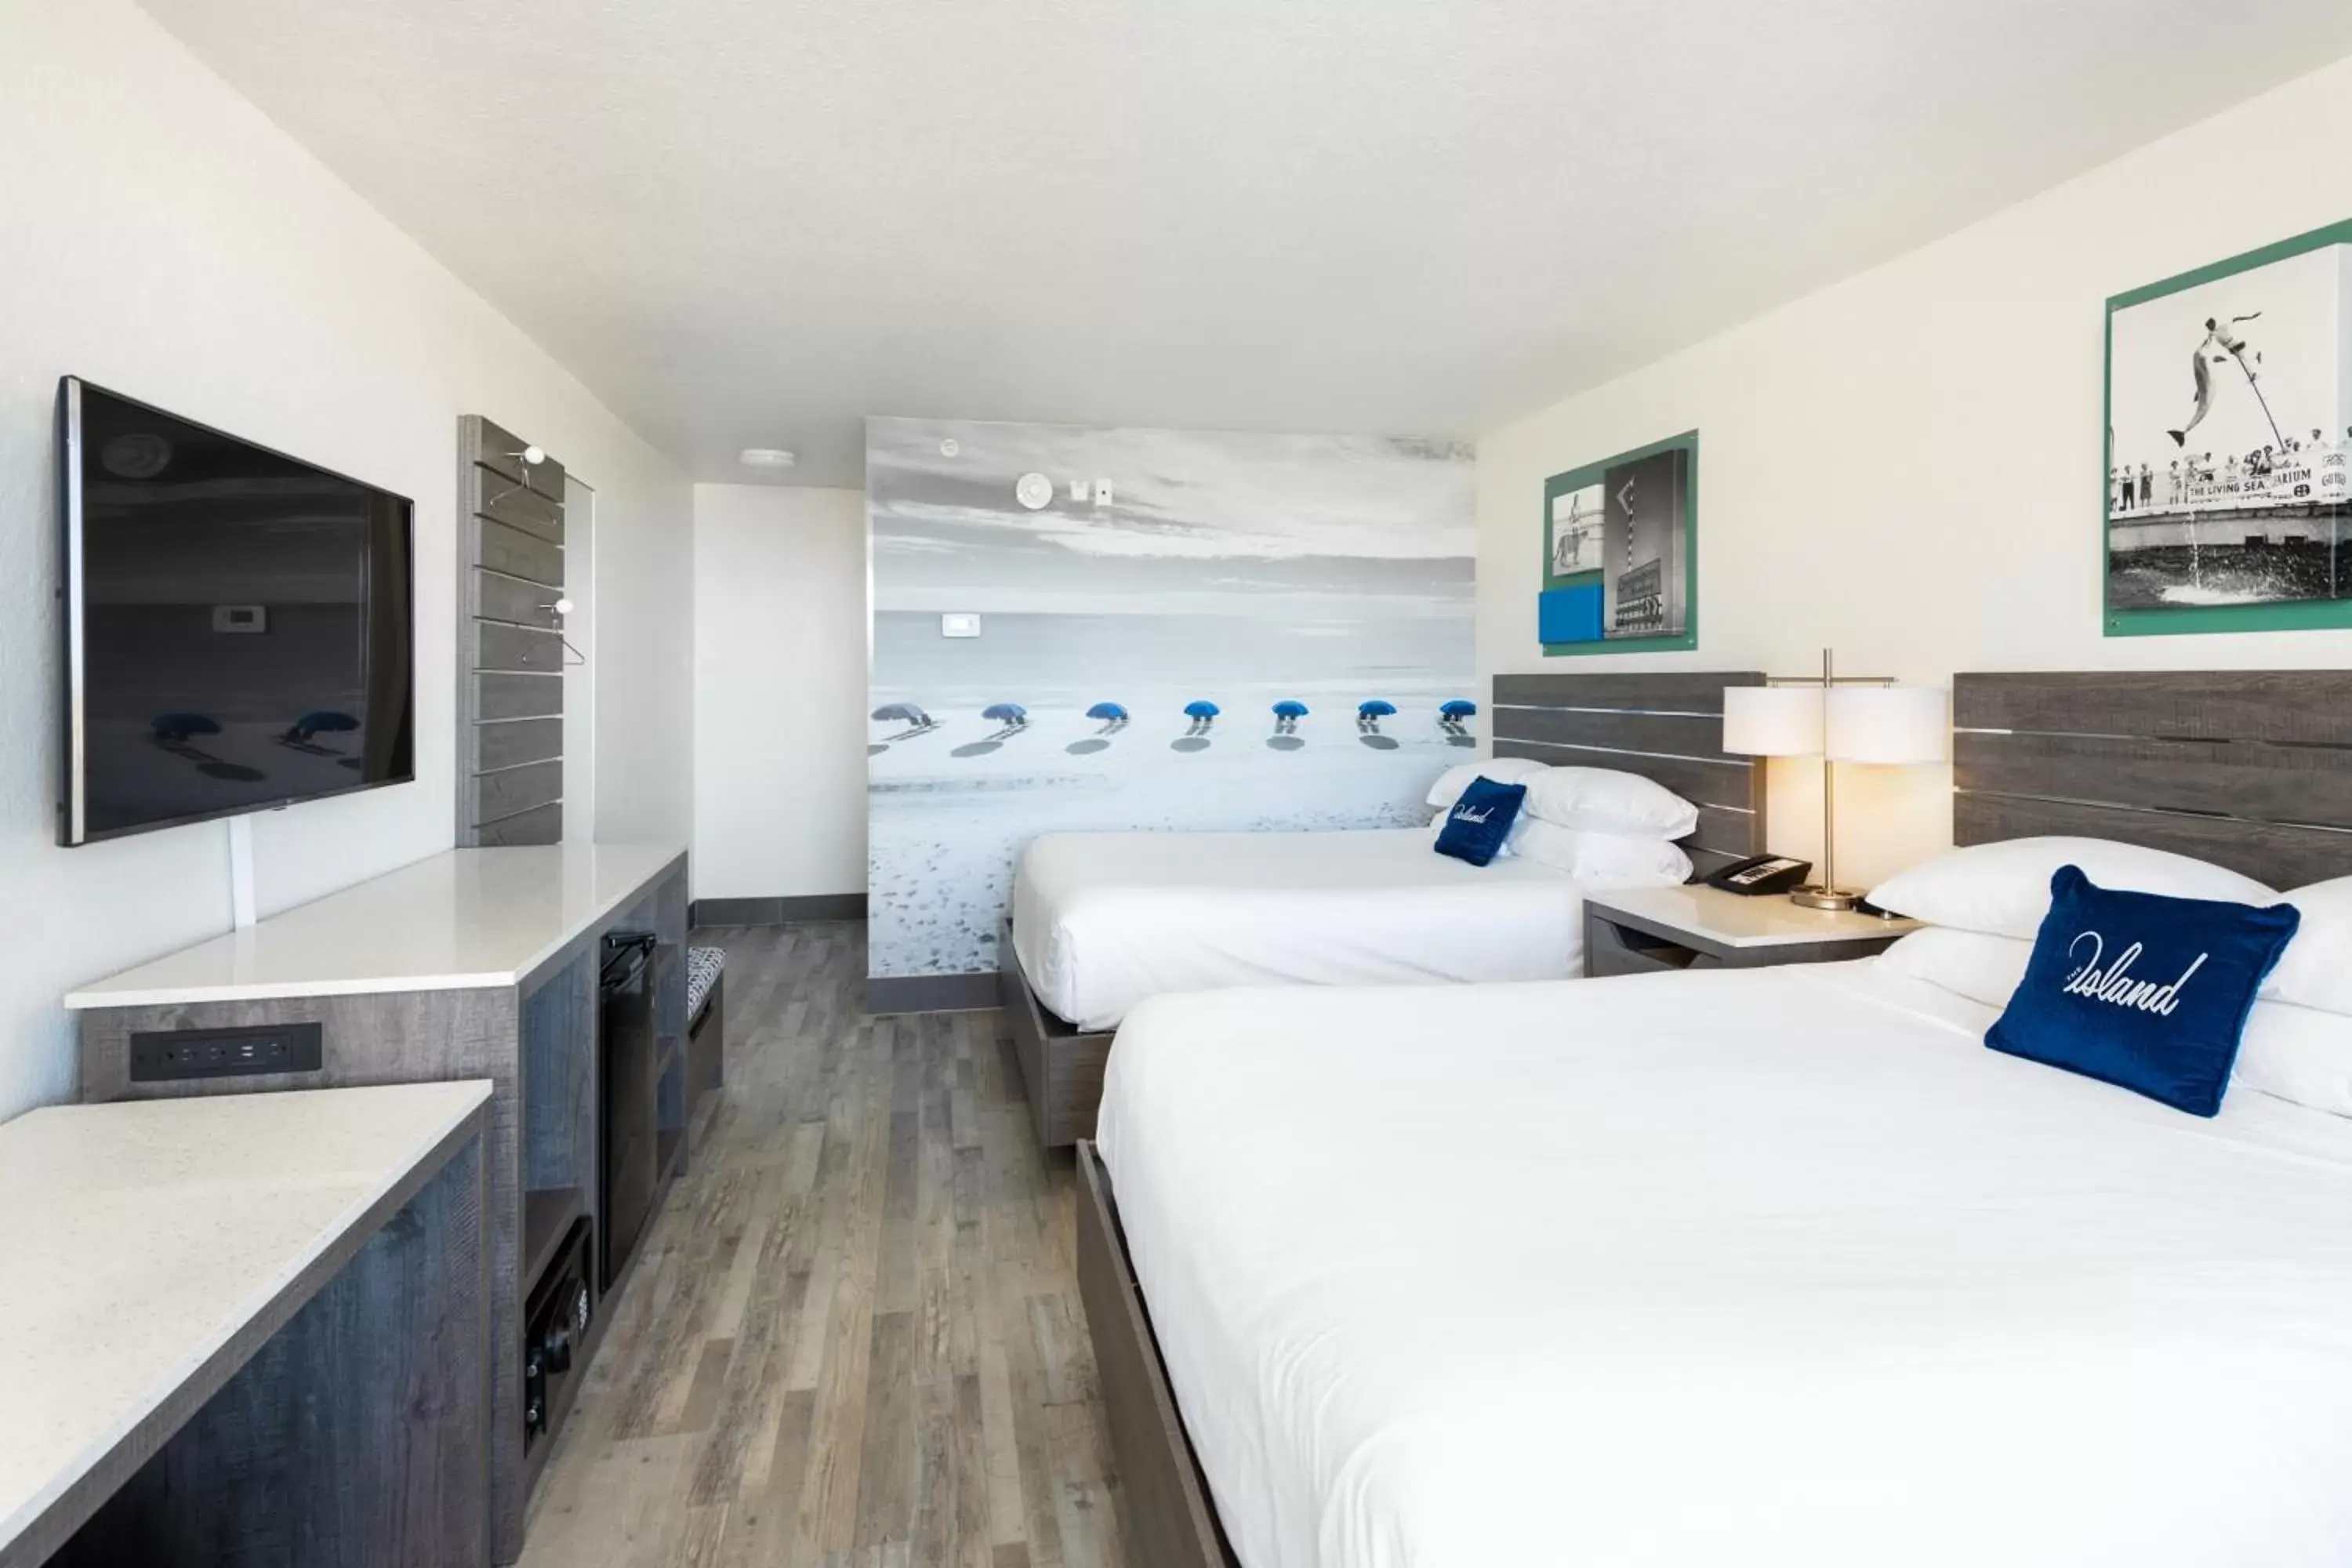 Bedroom in The Island Resort at Fort Walton Beach